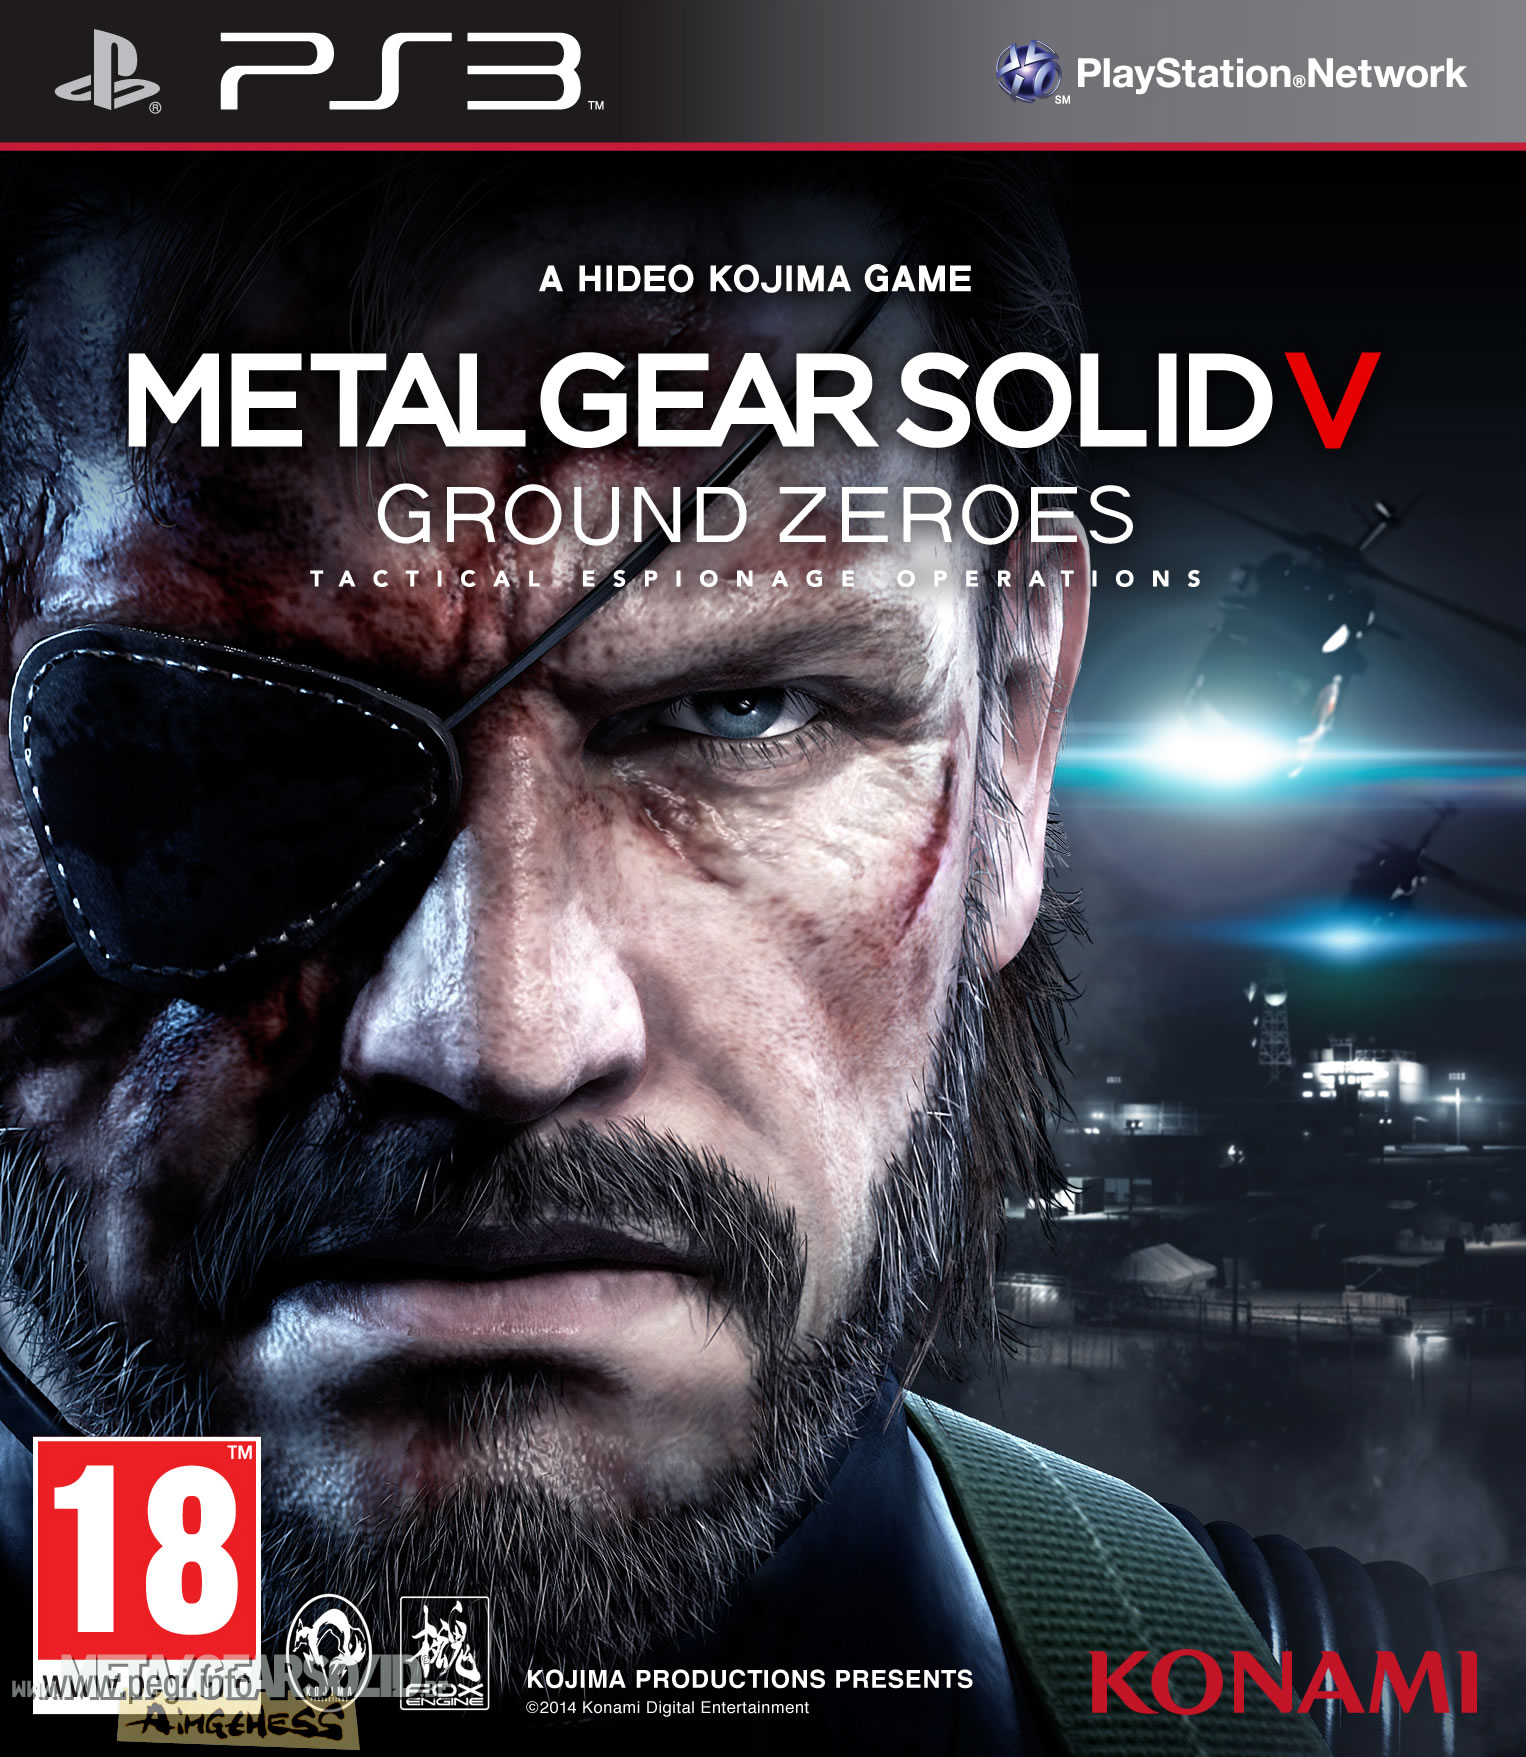 La jaquette PS3 europenne de Metal Gear Solid V : Ground Zeroes